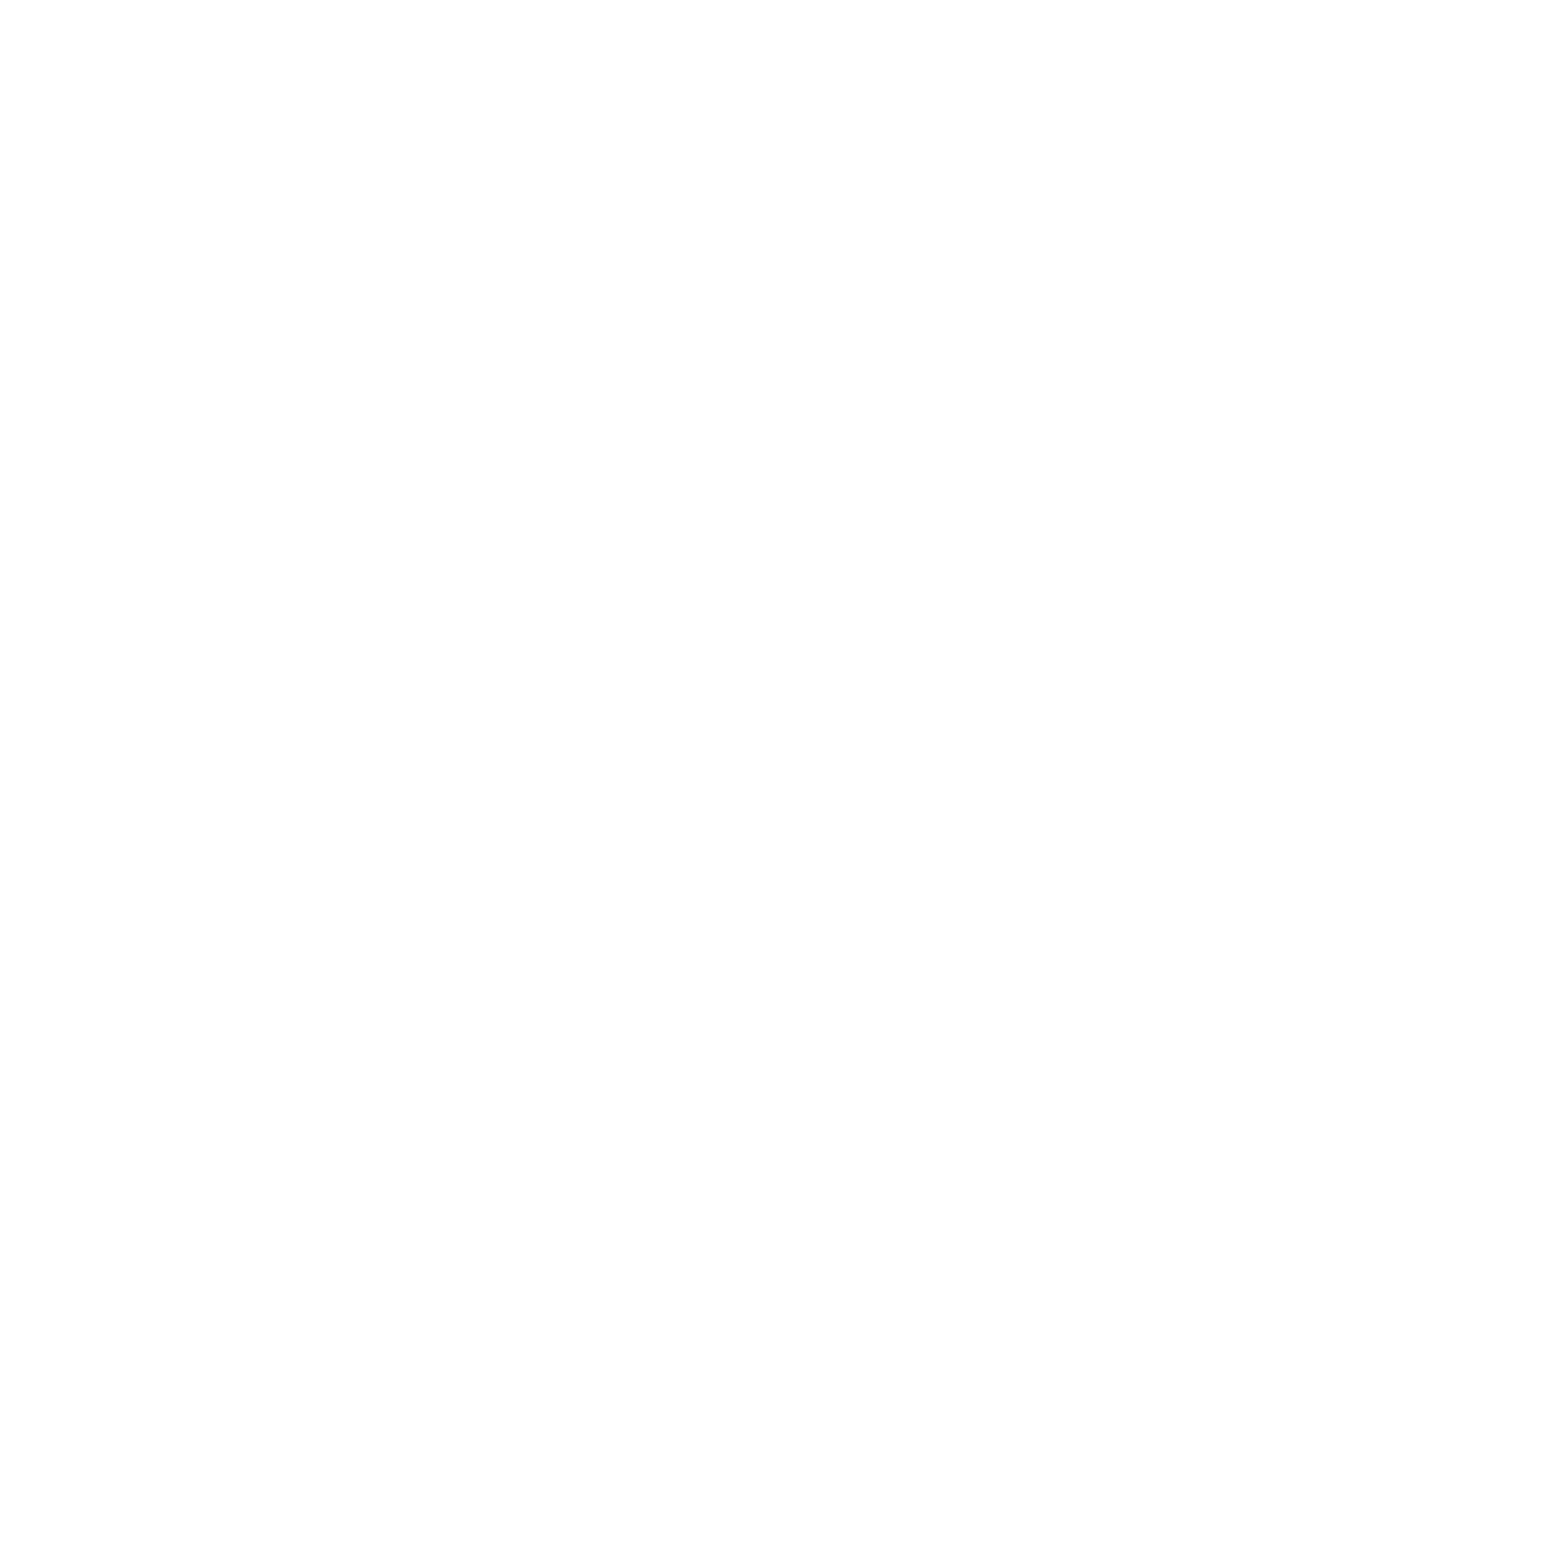 Silvergate Capital logo for dark backgrounds (transparent PNG)